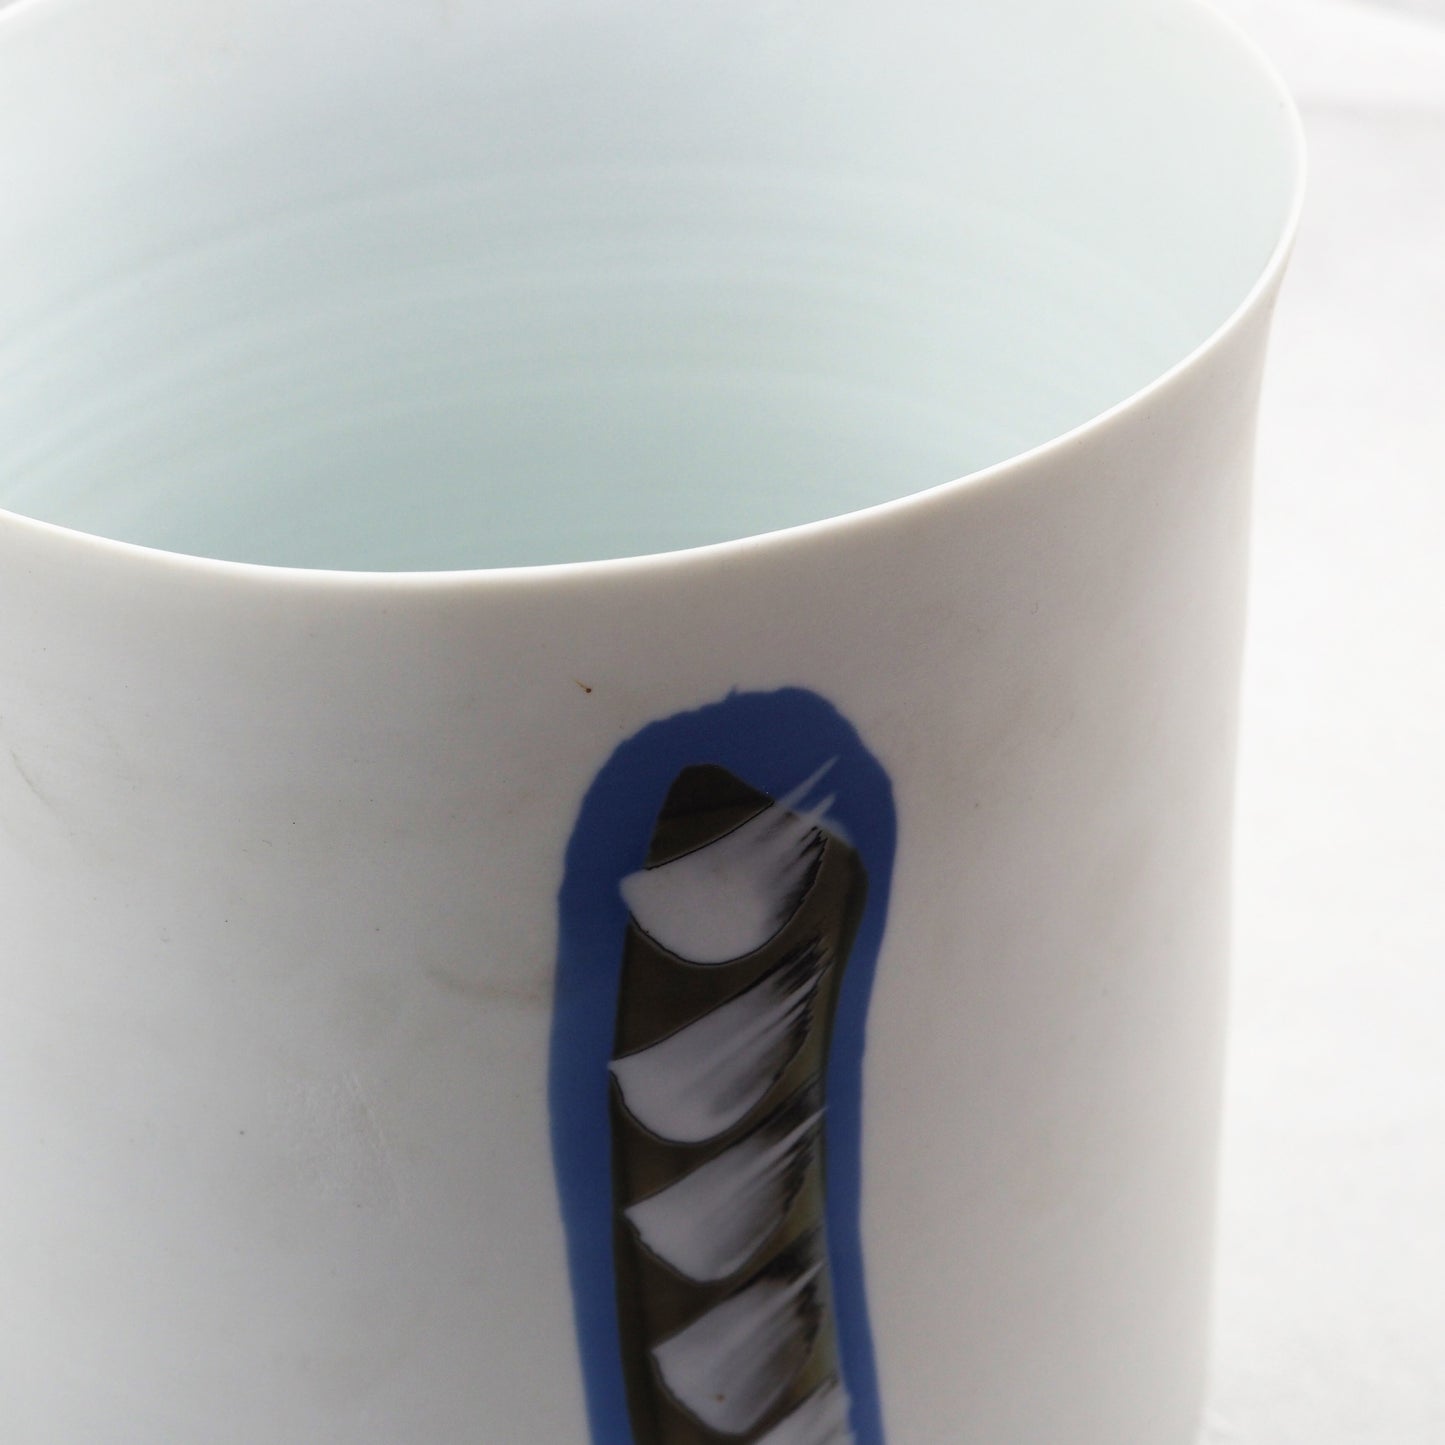 Les Blakebrough – Porcelain Conical Vessel | Les Blakebrough | Primavera Gallery